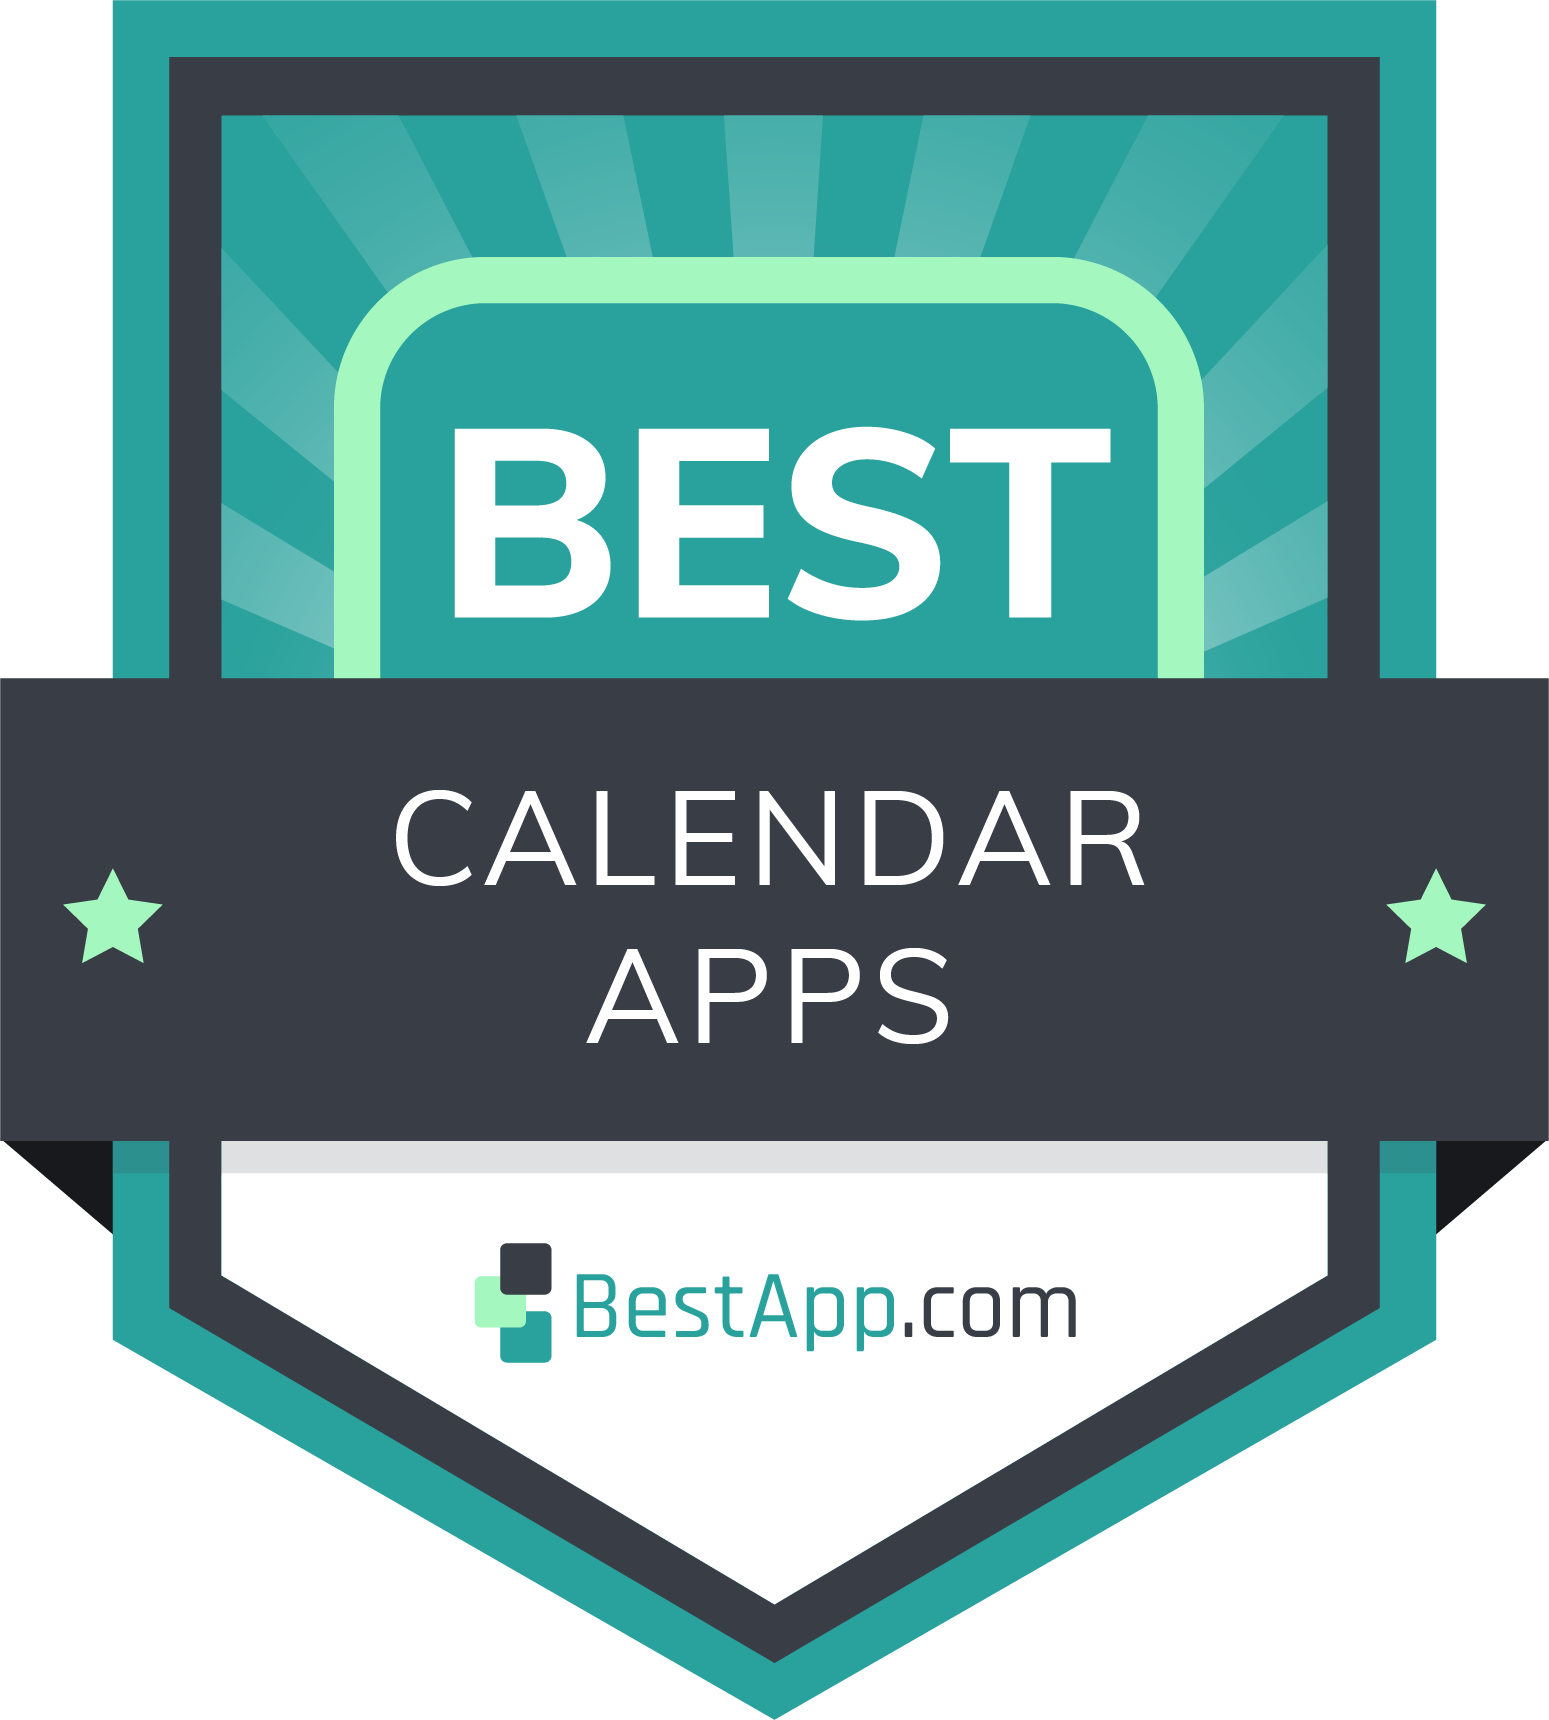 Best Calendar Apps Badge